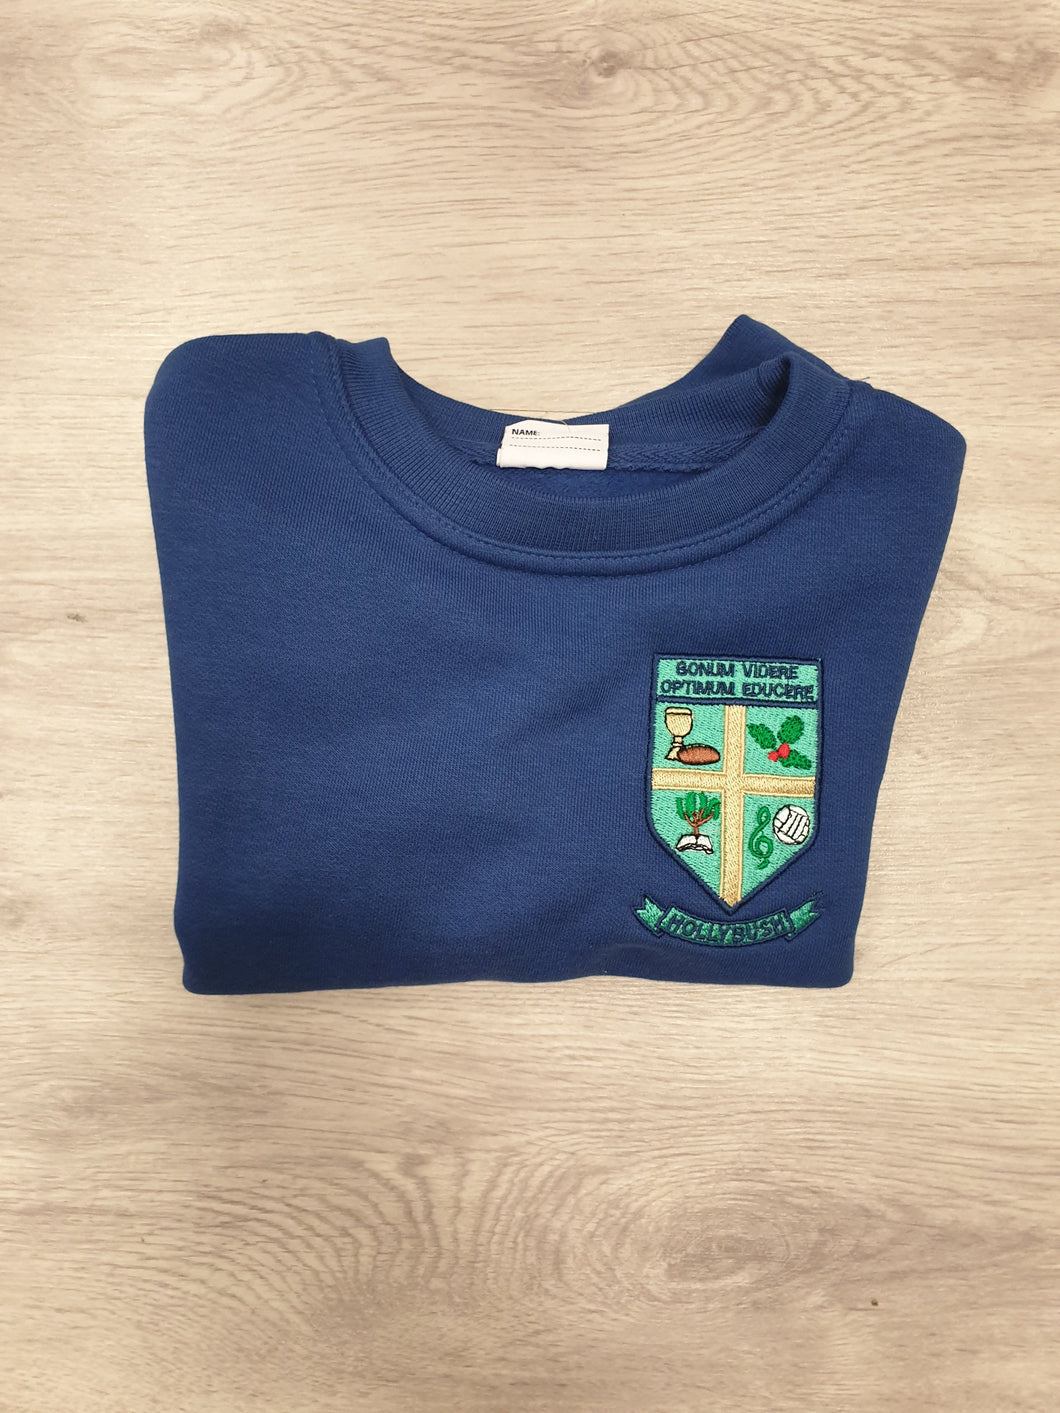 2 x Hollybush nursery royal blue sweatshirt (SAVE 10%)